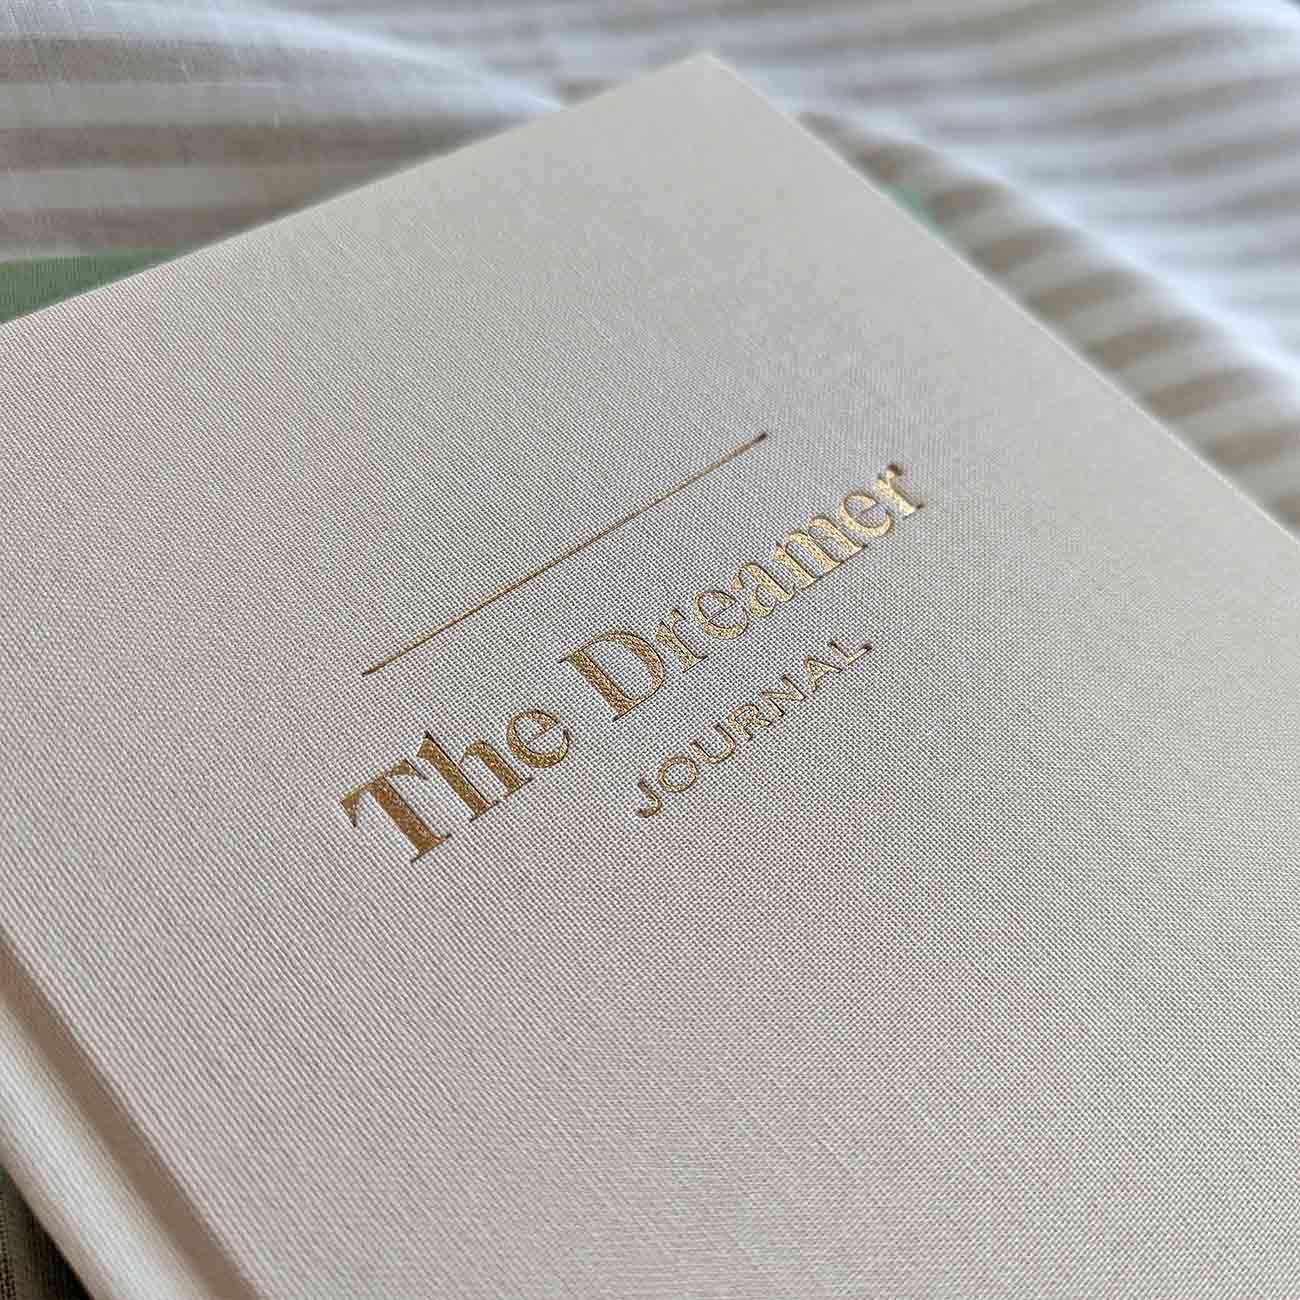 The Dreamer Journal Cover Detail